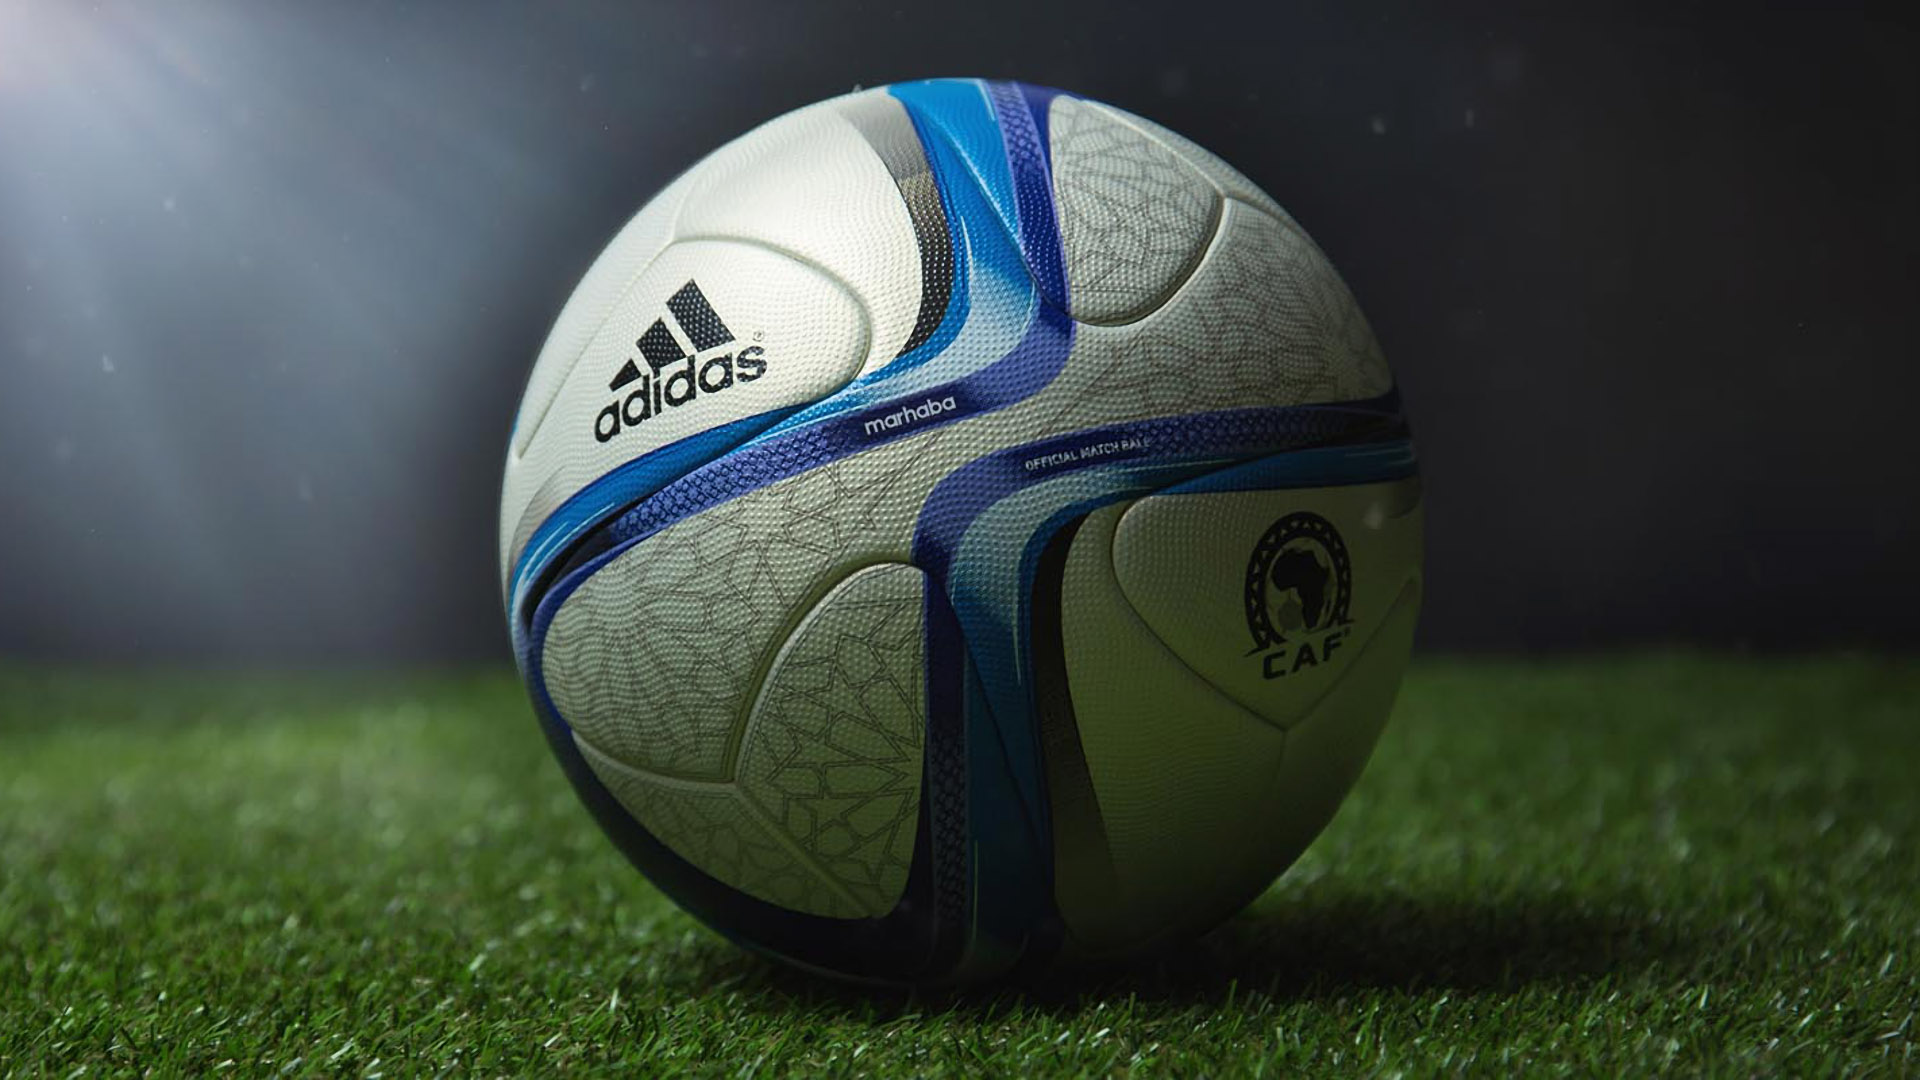 Adidas Marhaba Africa Cup Ball Wallpaper